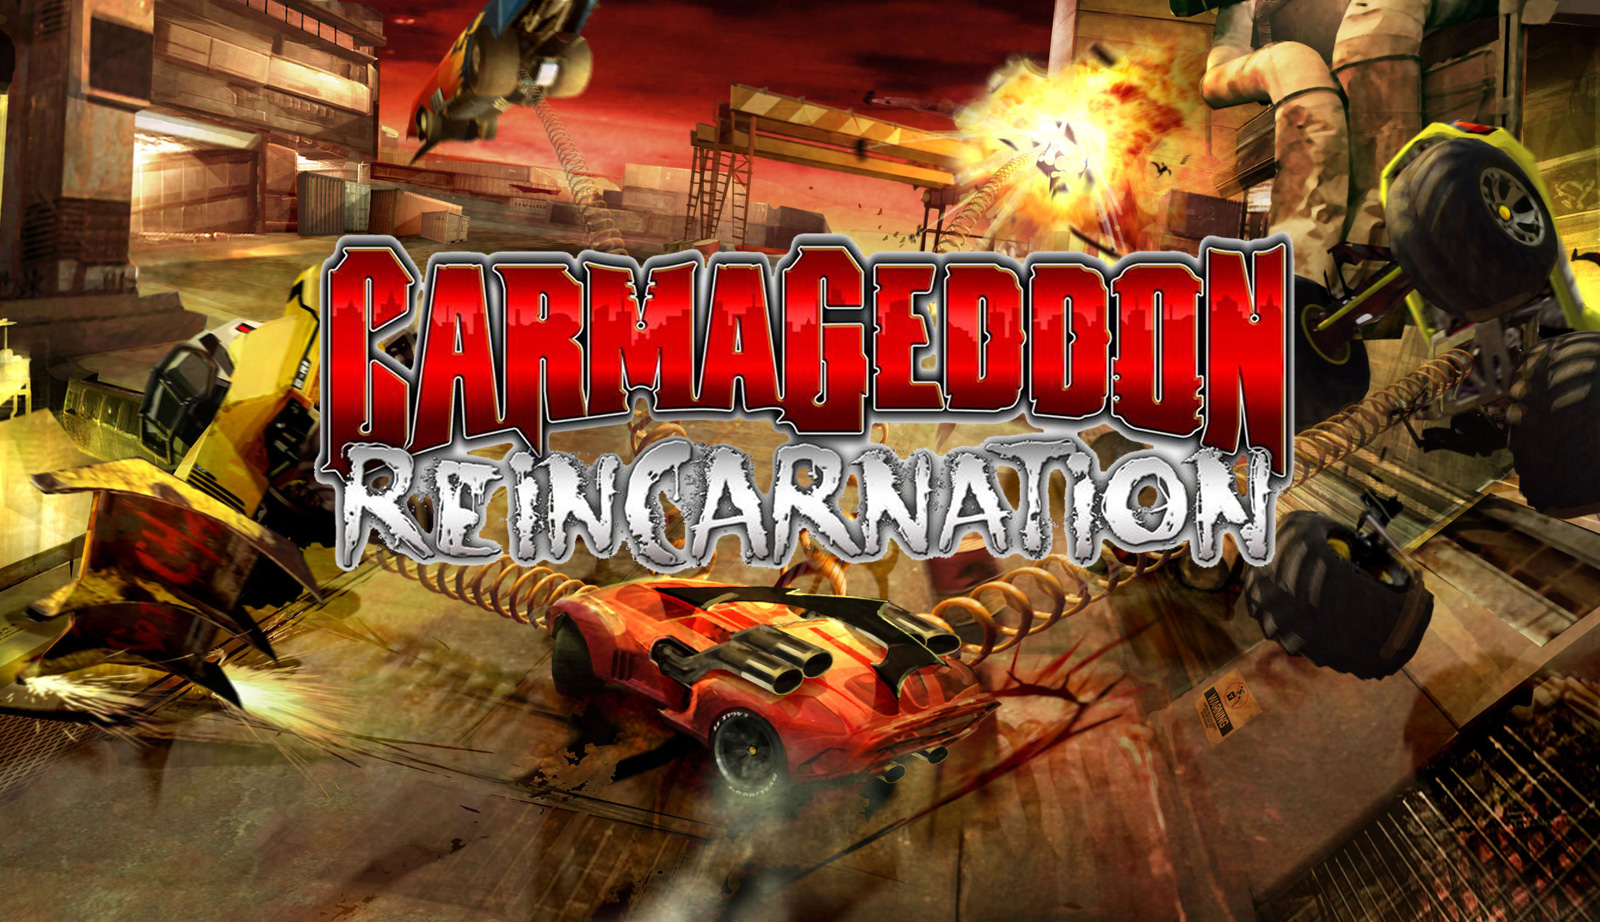 carmageddon reincarnation xbox one release date